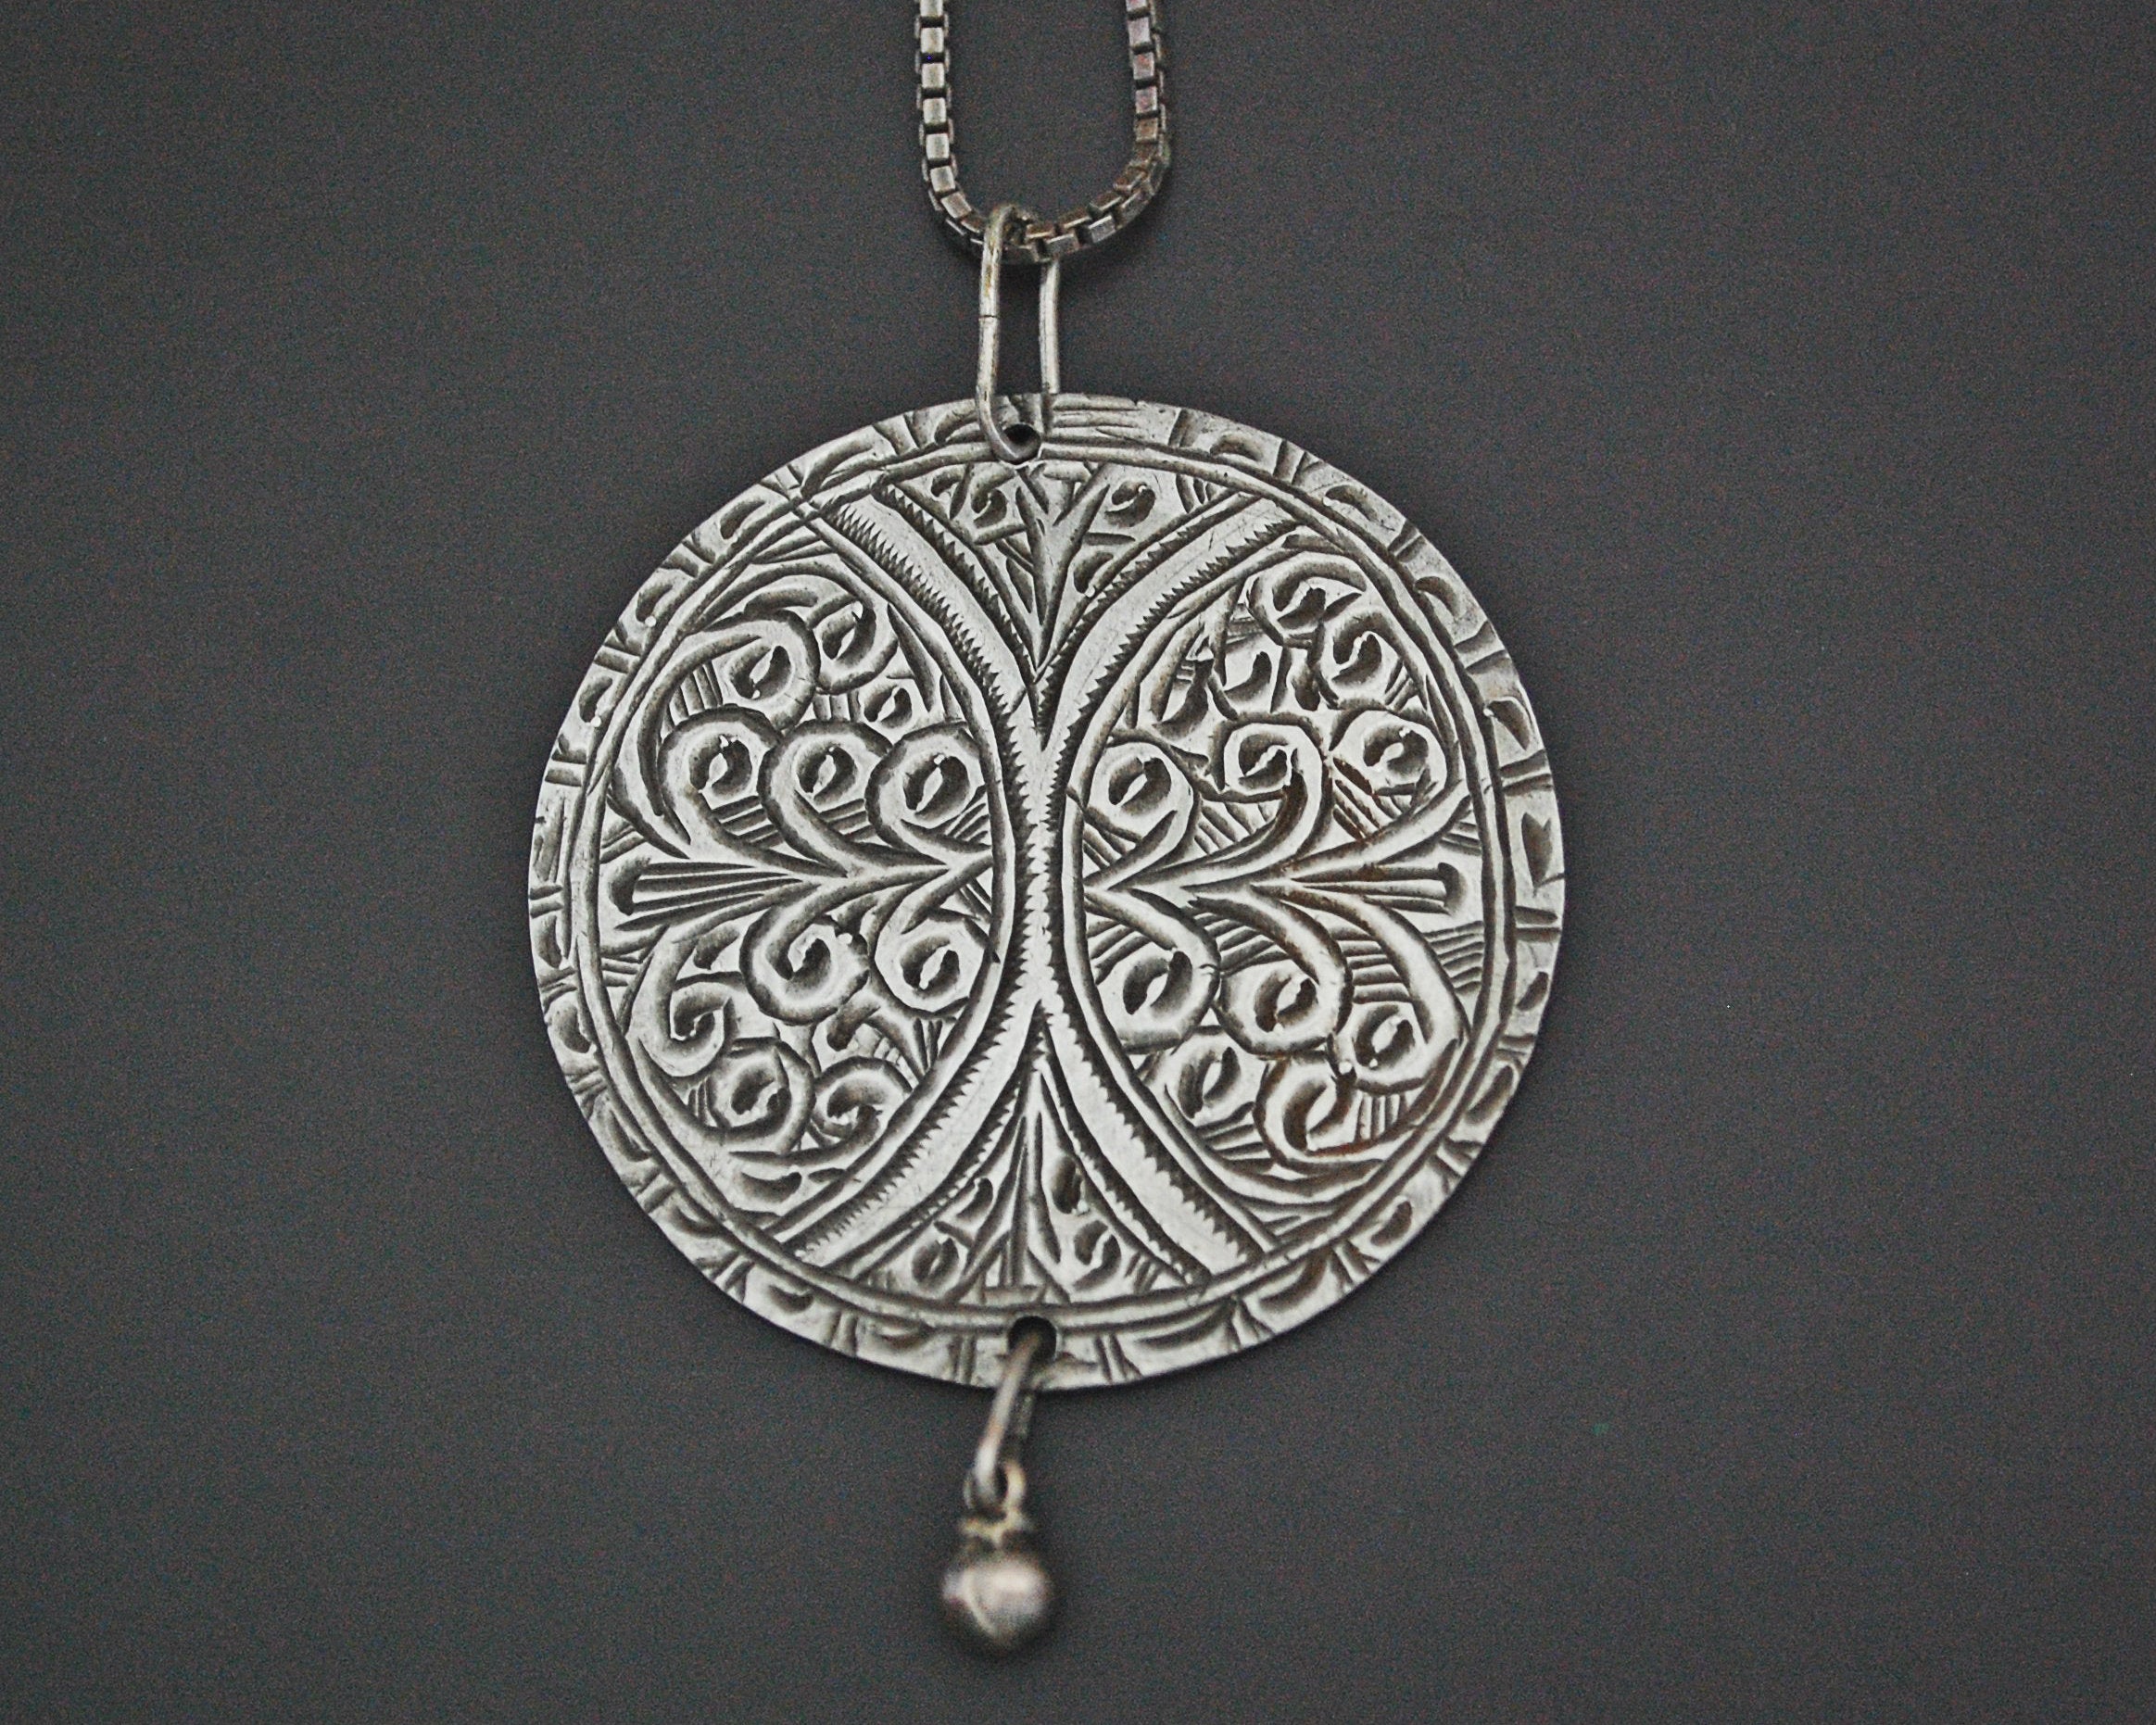 Engraved Berber Head Ornament Pendant on Chain